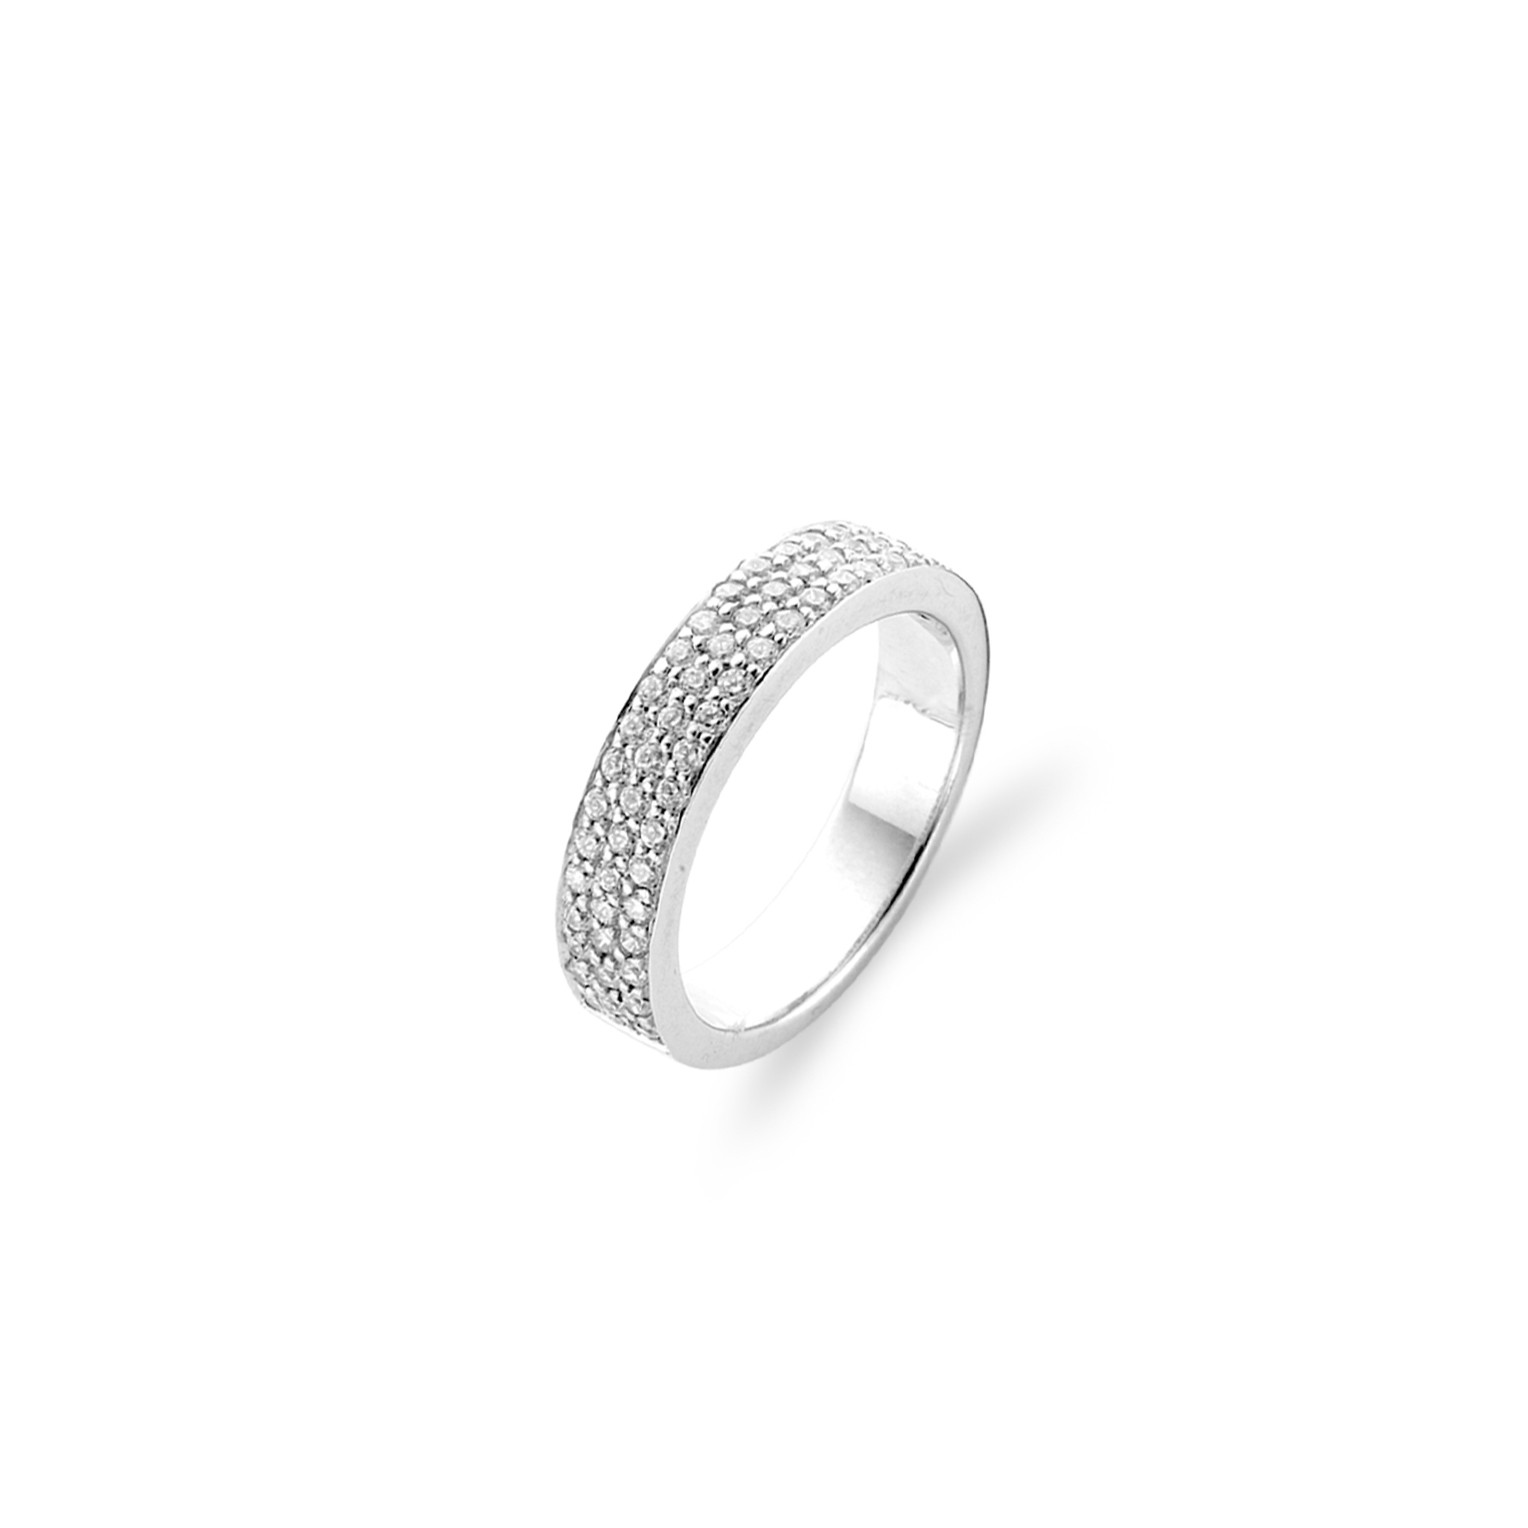 TI SENTO - Milano Ring 1401ZI Gala Jewelers Inc. White Oak, PA